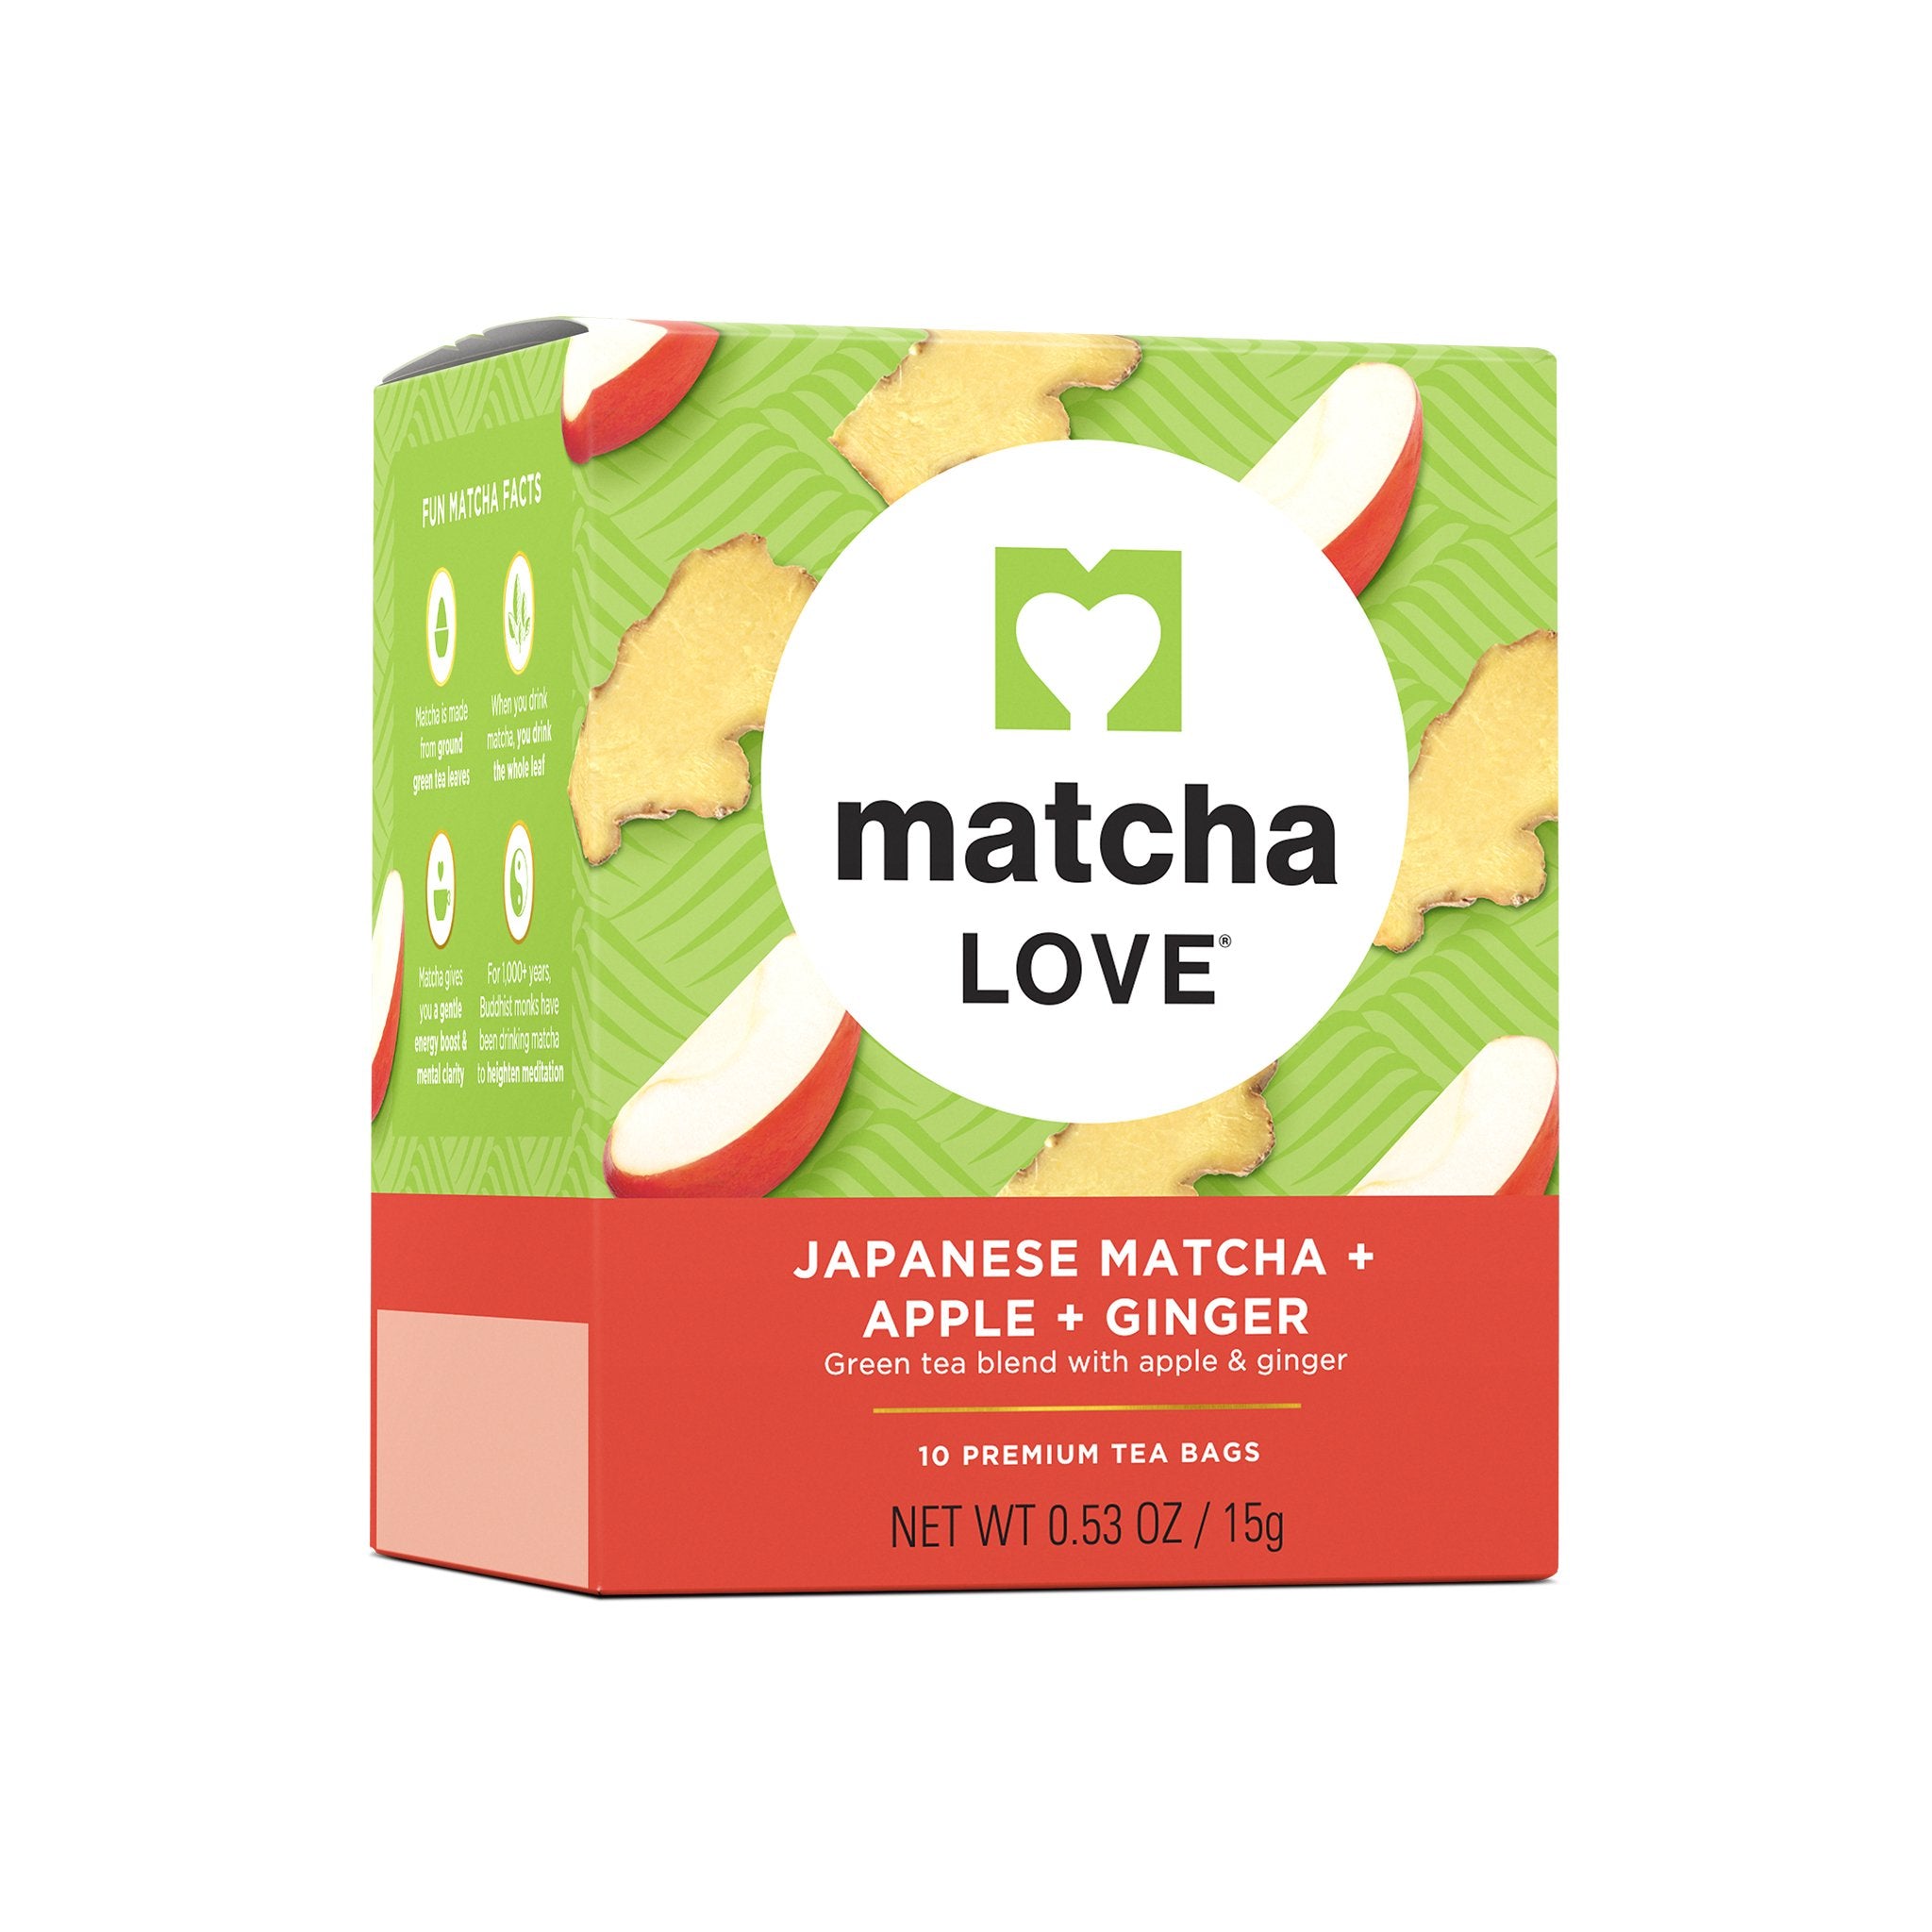 Japanese Matcha + Apple + Ginger